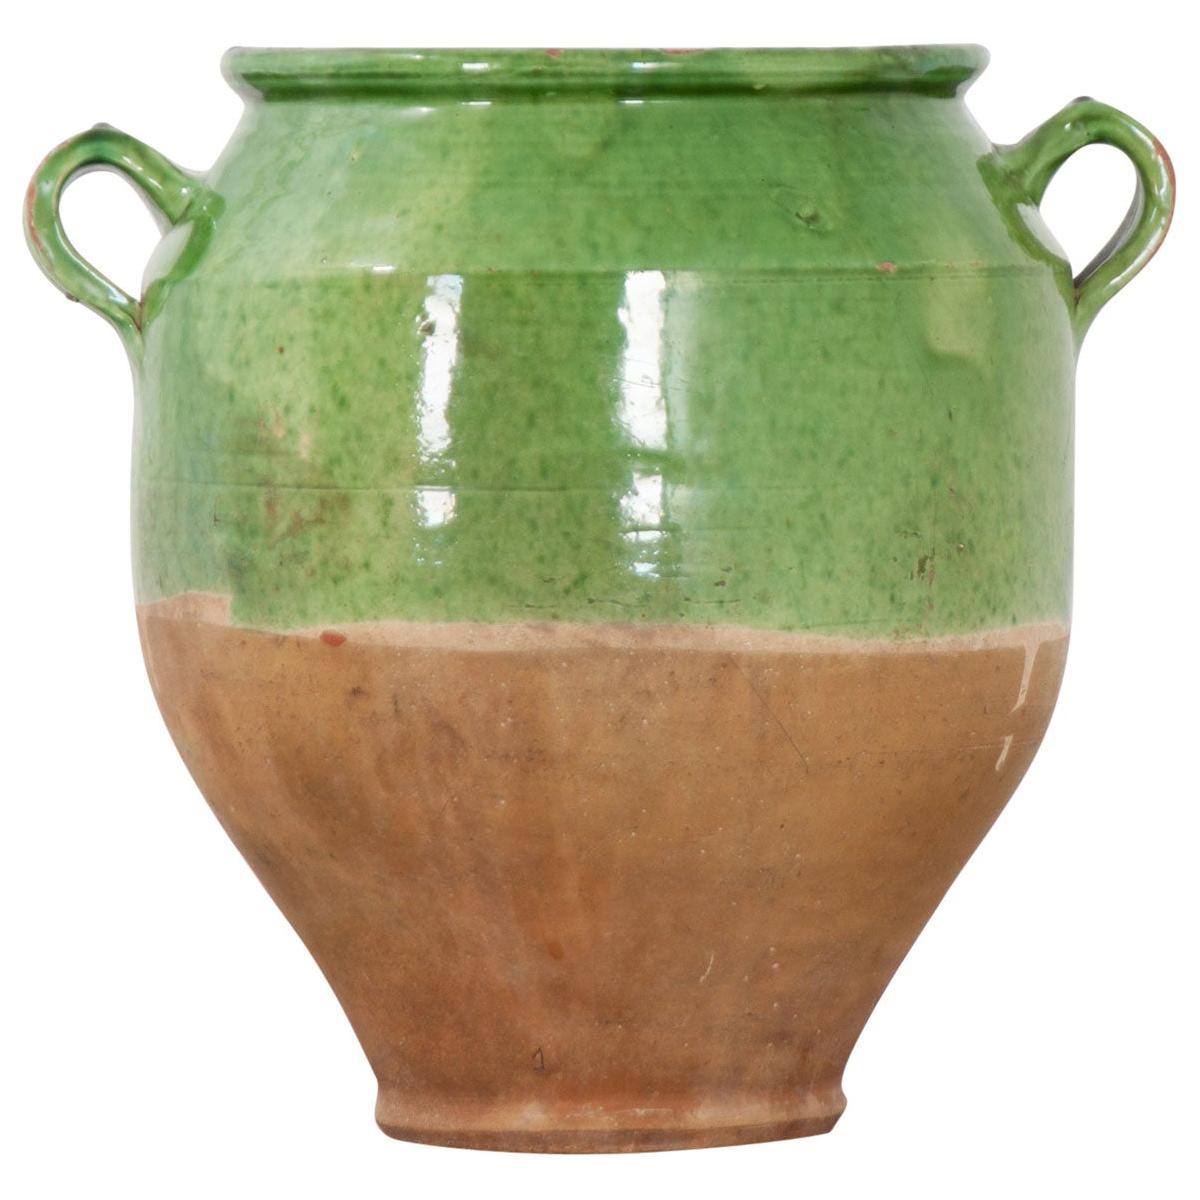 French 19th Century Glazed Confit Jar